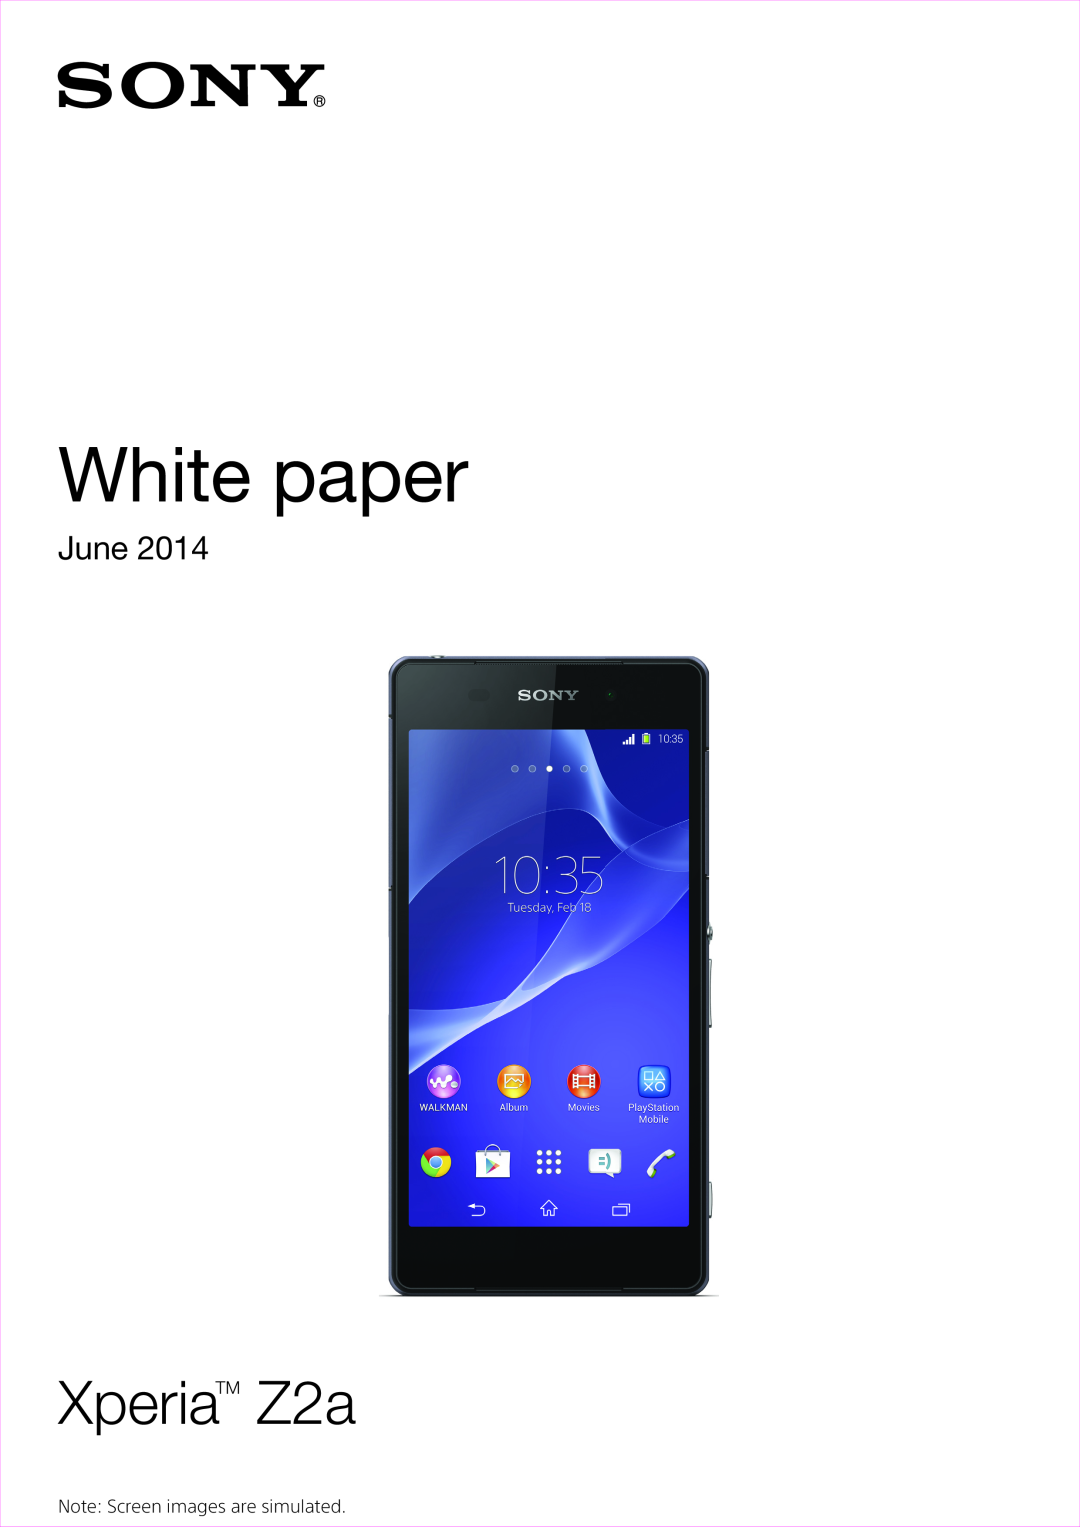 Sony manual White paper, XperiaTM Z2a, June 